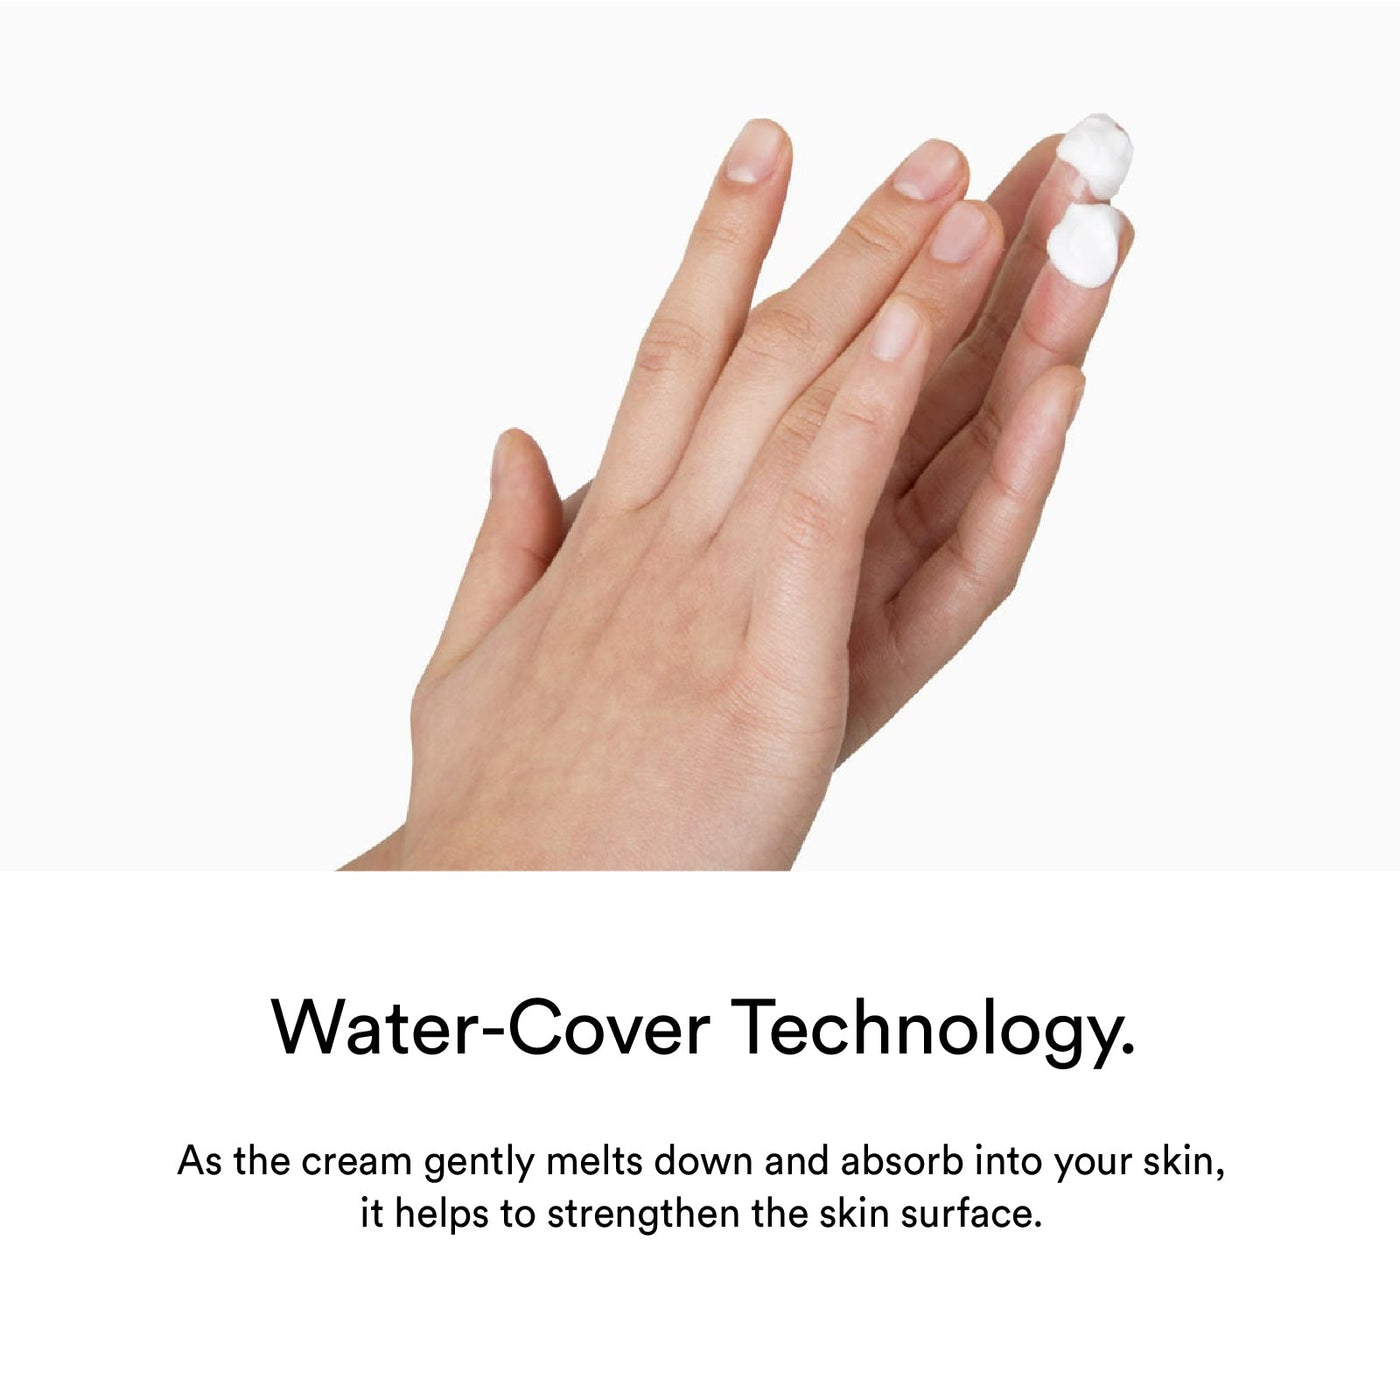 [Abib] Creme Hidratante para as Mãos Hand Creme Type V Fragrant Tube 50ml 🇰🇷